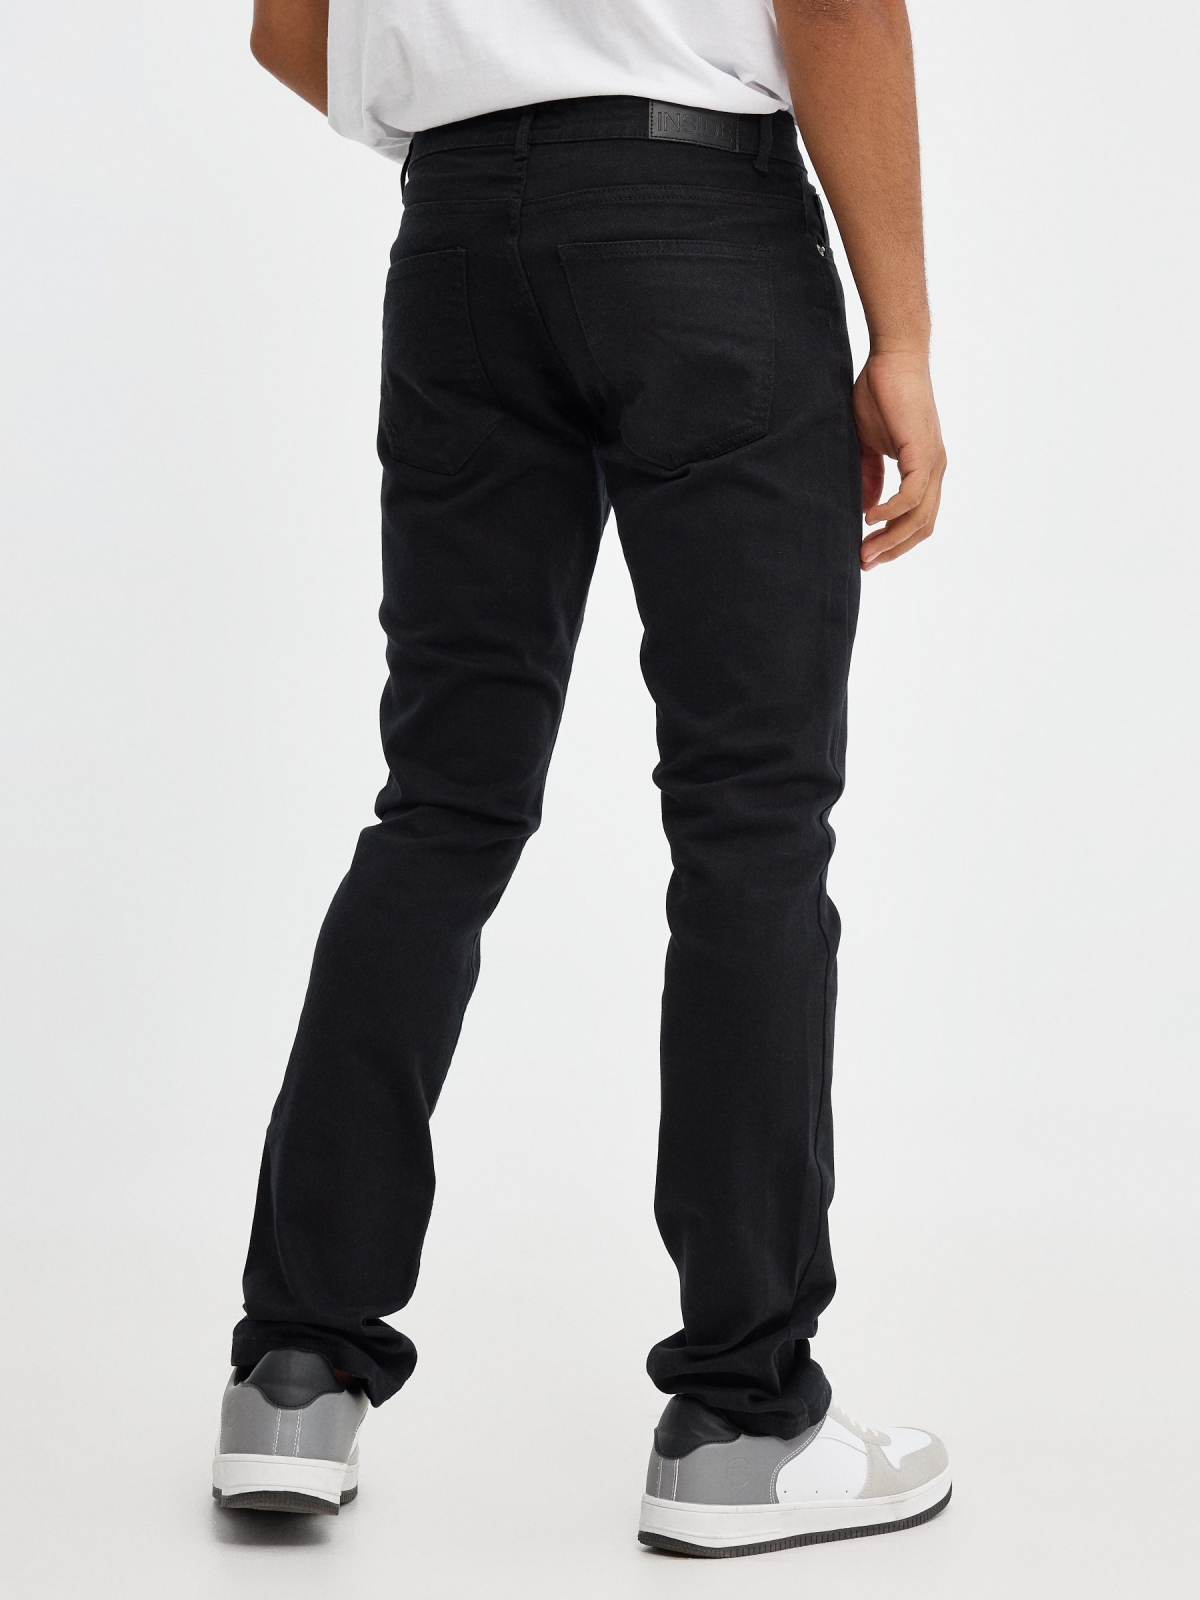 Jeans slim de colores negro vista media trasera